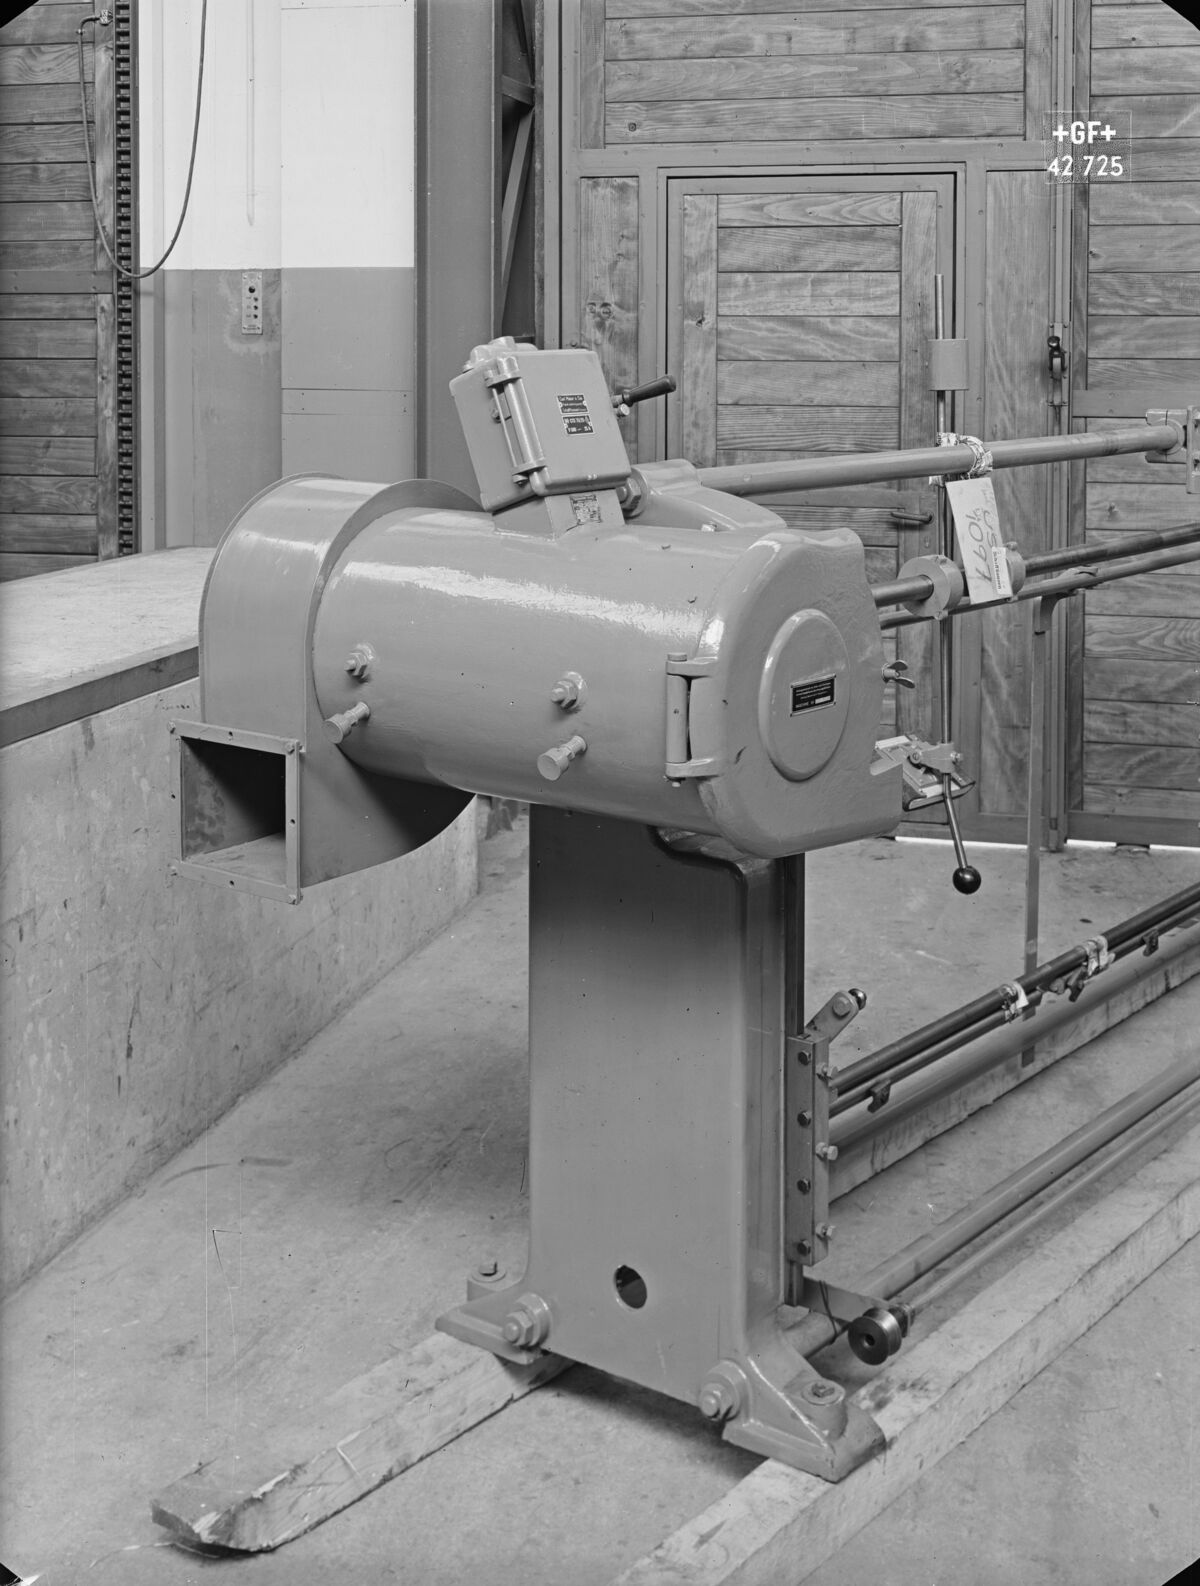 GFA 16/42725: Antrieb zu Haspelband Schleifmaschine